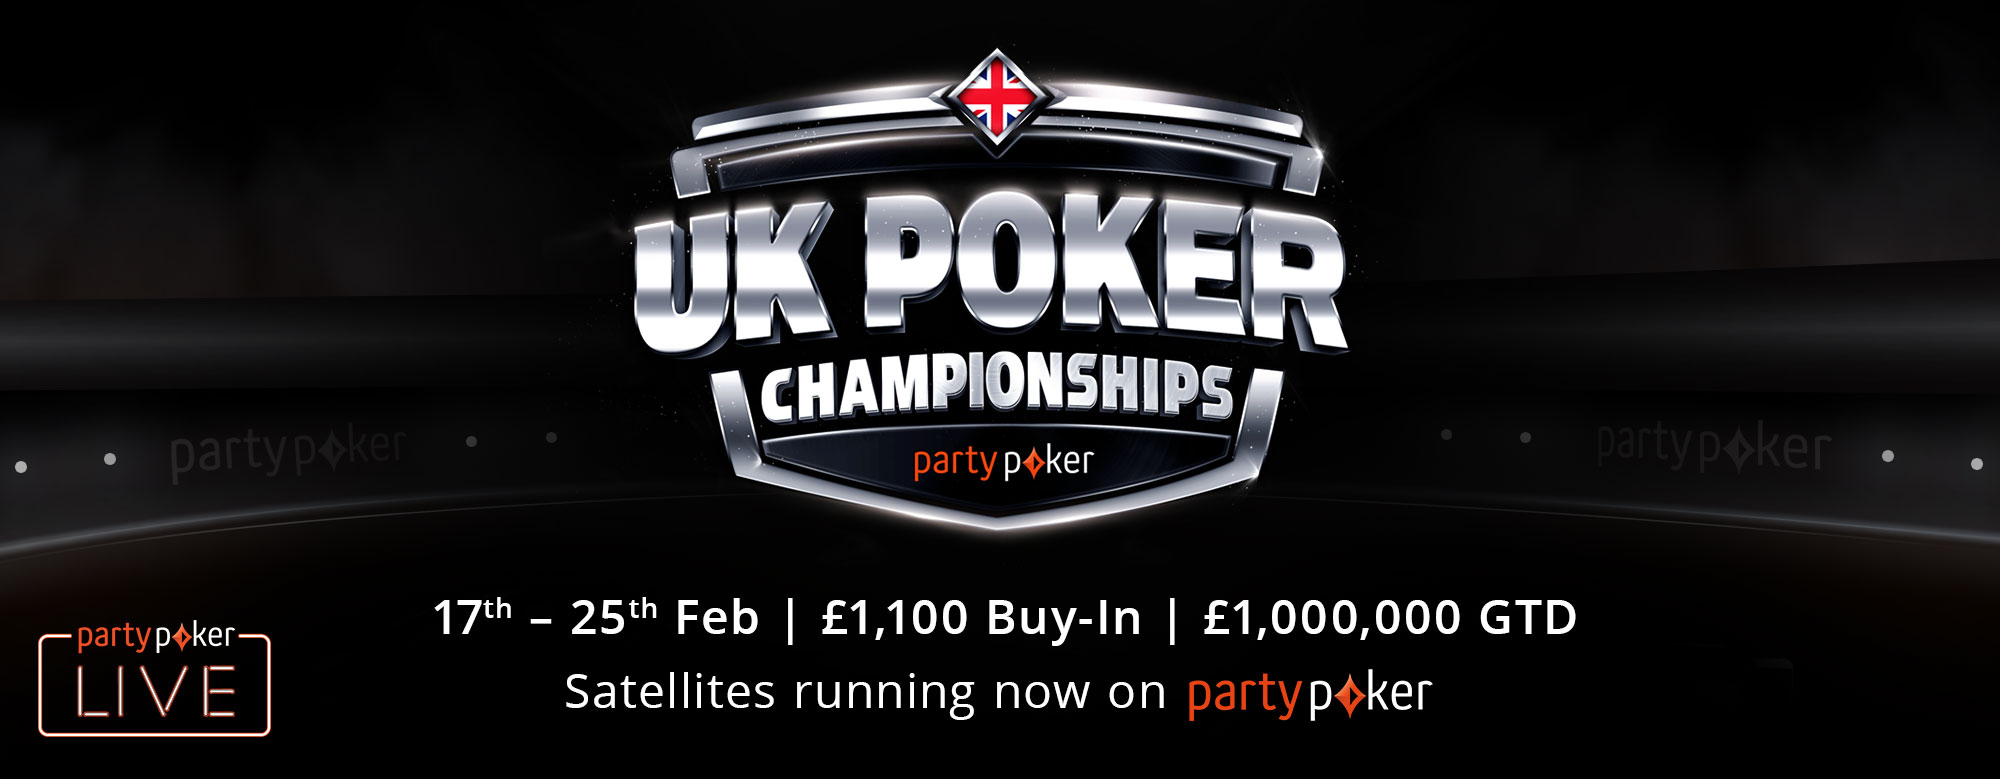 UK Poker Championships